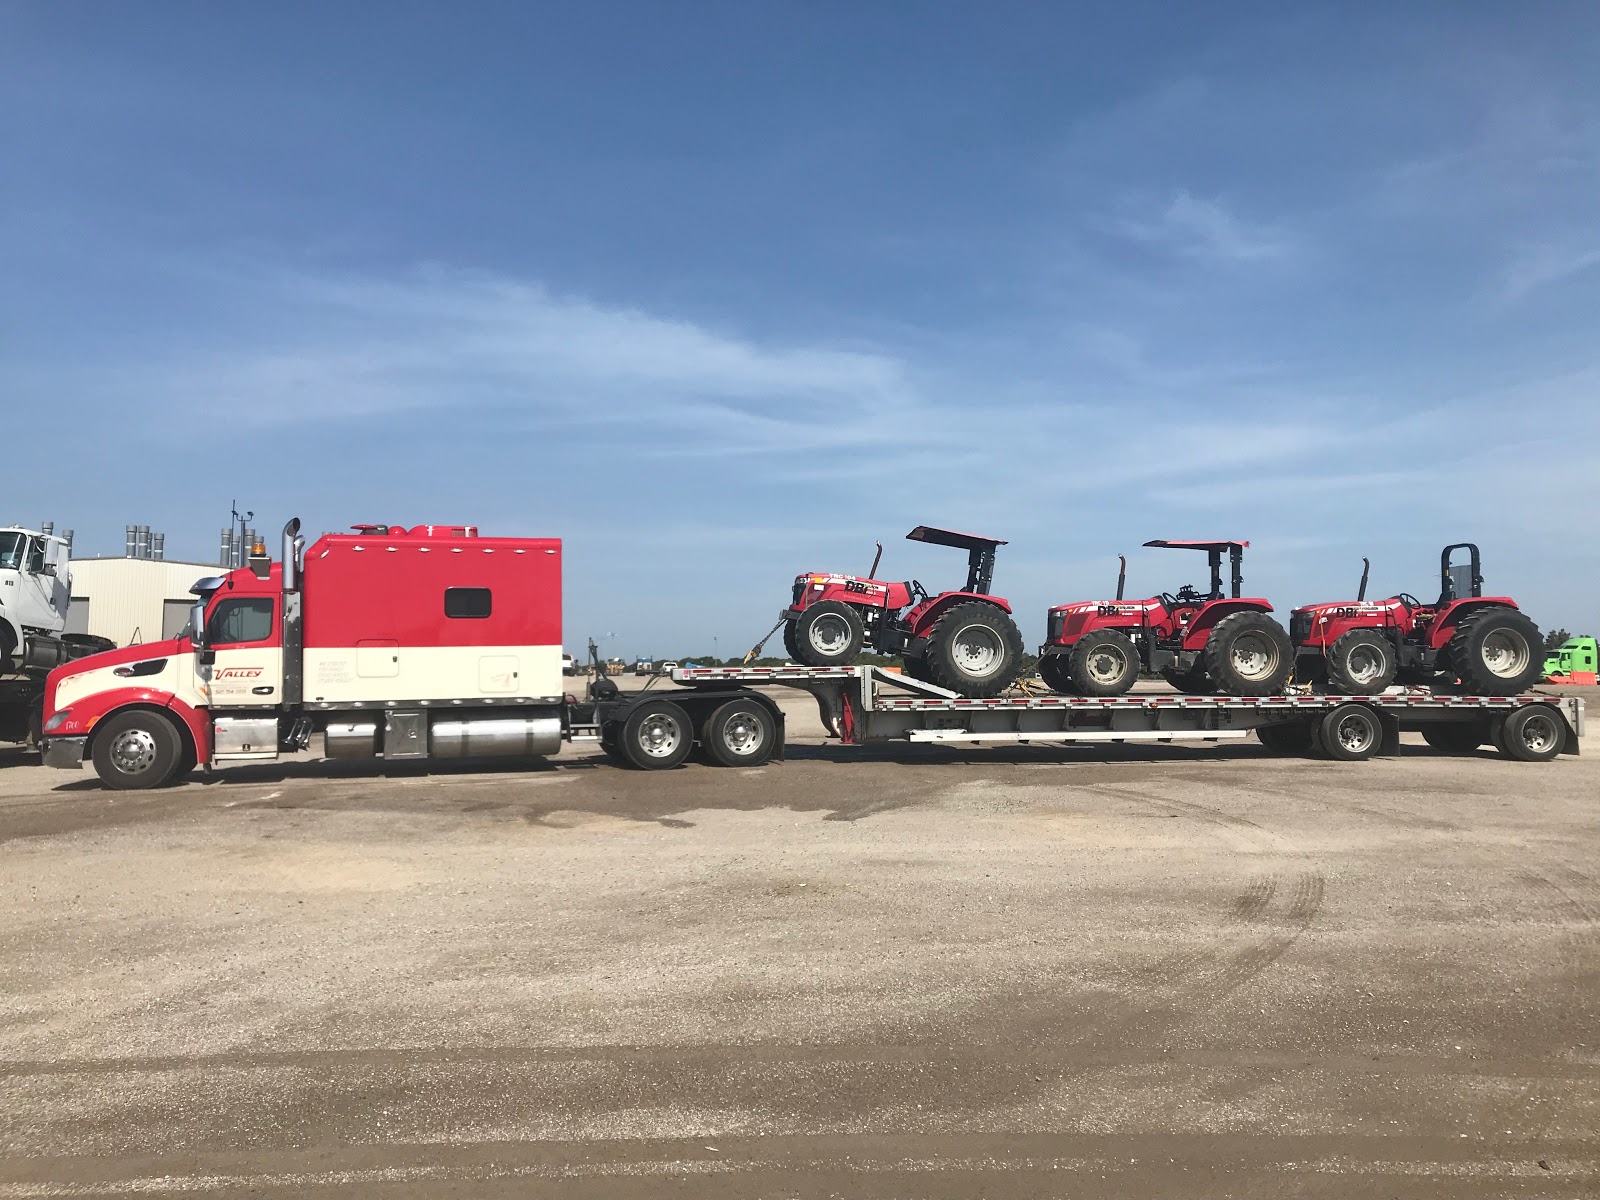 3 massey ferguson 2660 tractors being transported